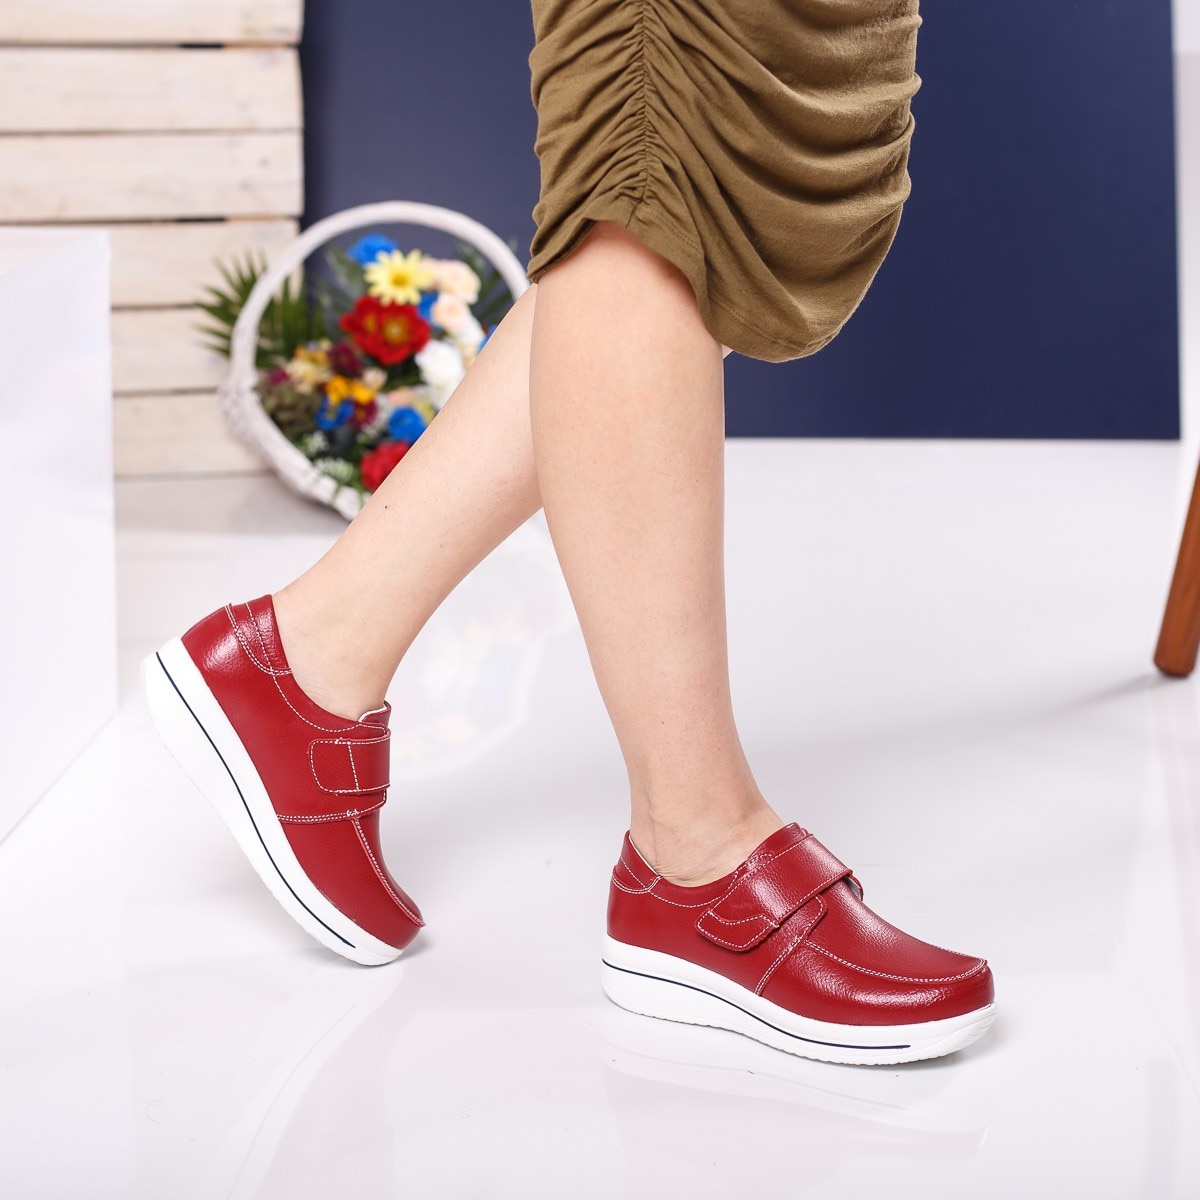 Pantofi dama Ginny rosii comozi, 38, Rosu, Piele naturala eMAG.ro